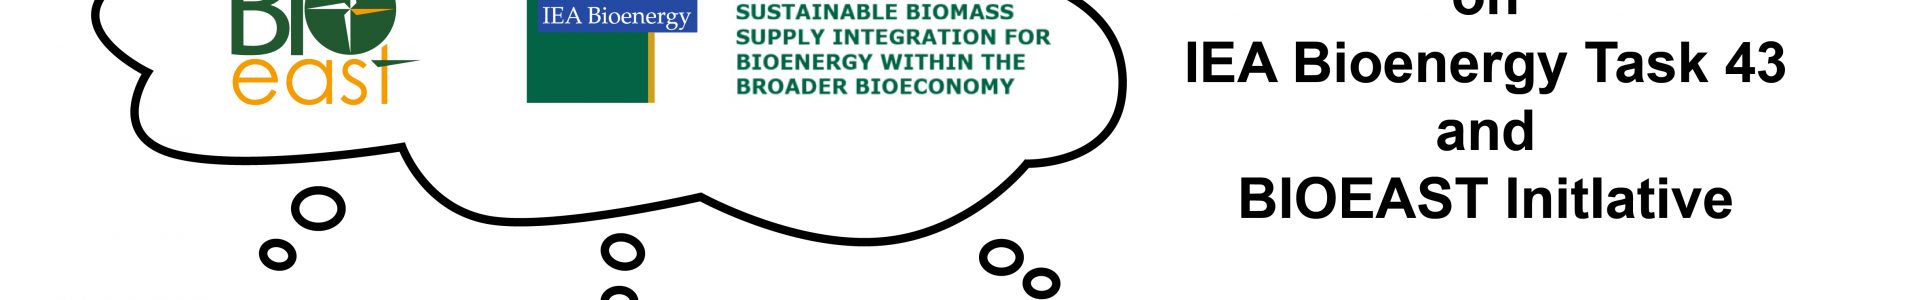 Joint IEA Bioenergy Task43 and BIOEAST Initiative Workshop